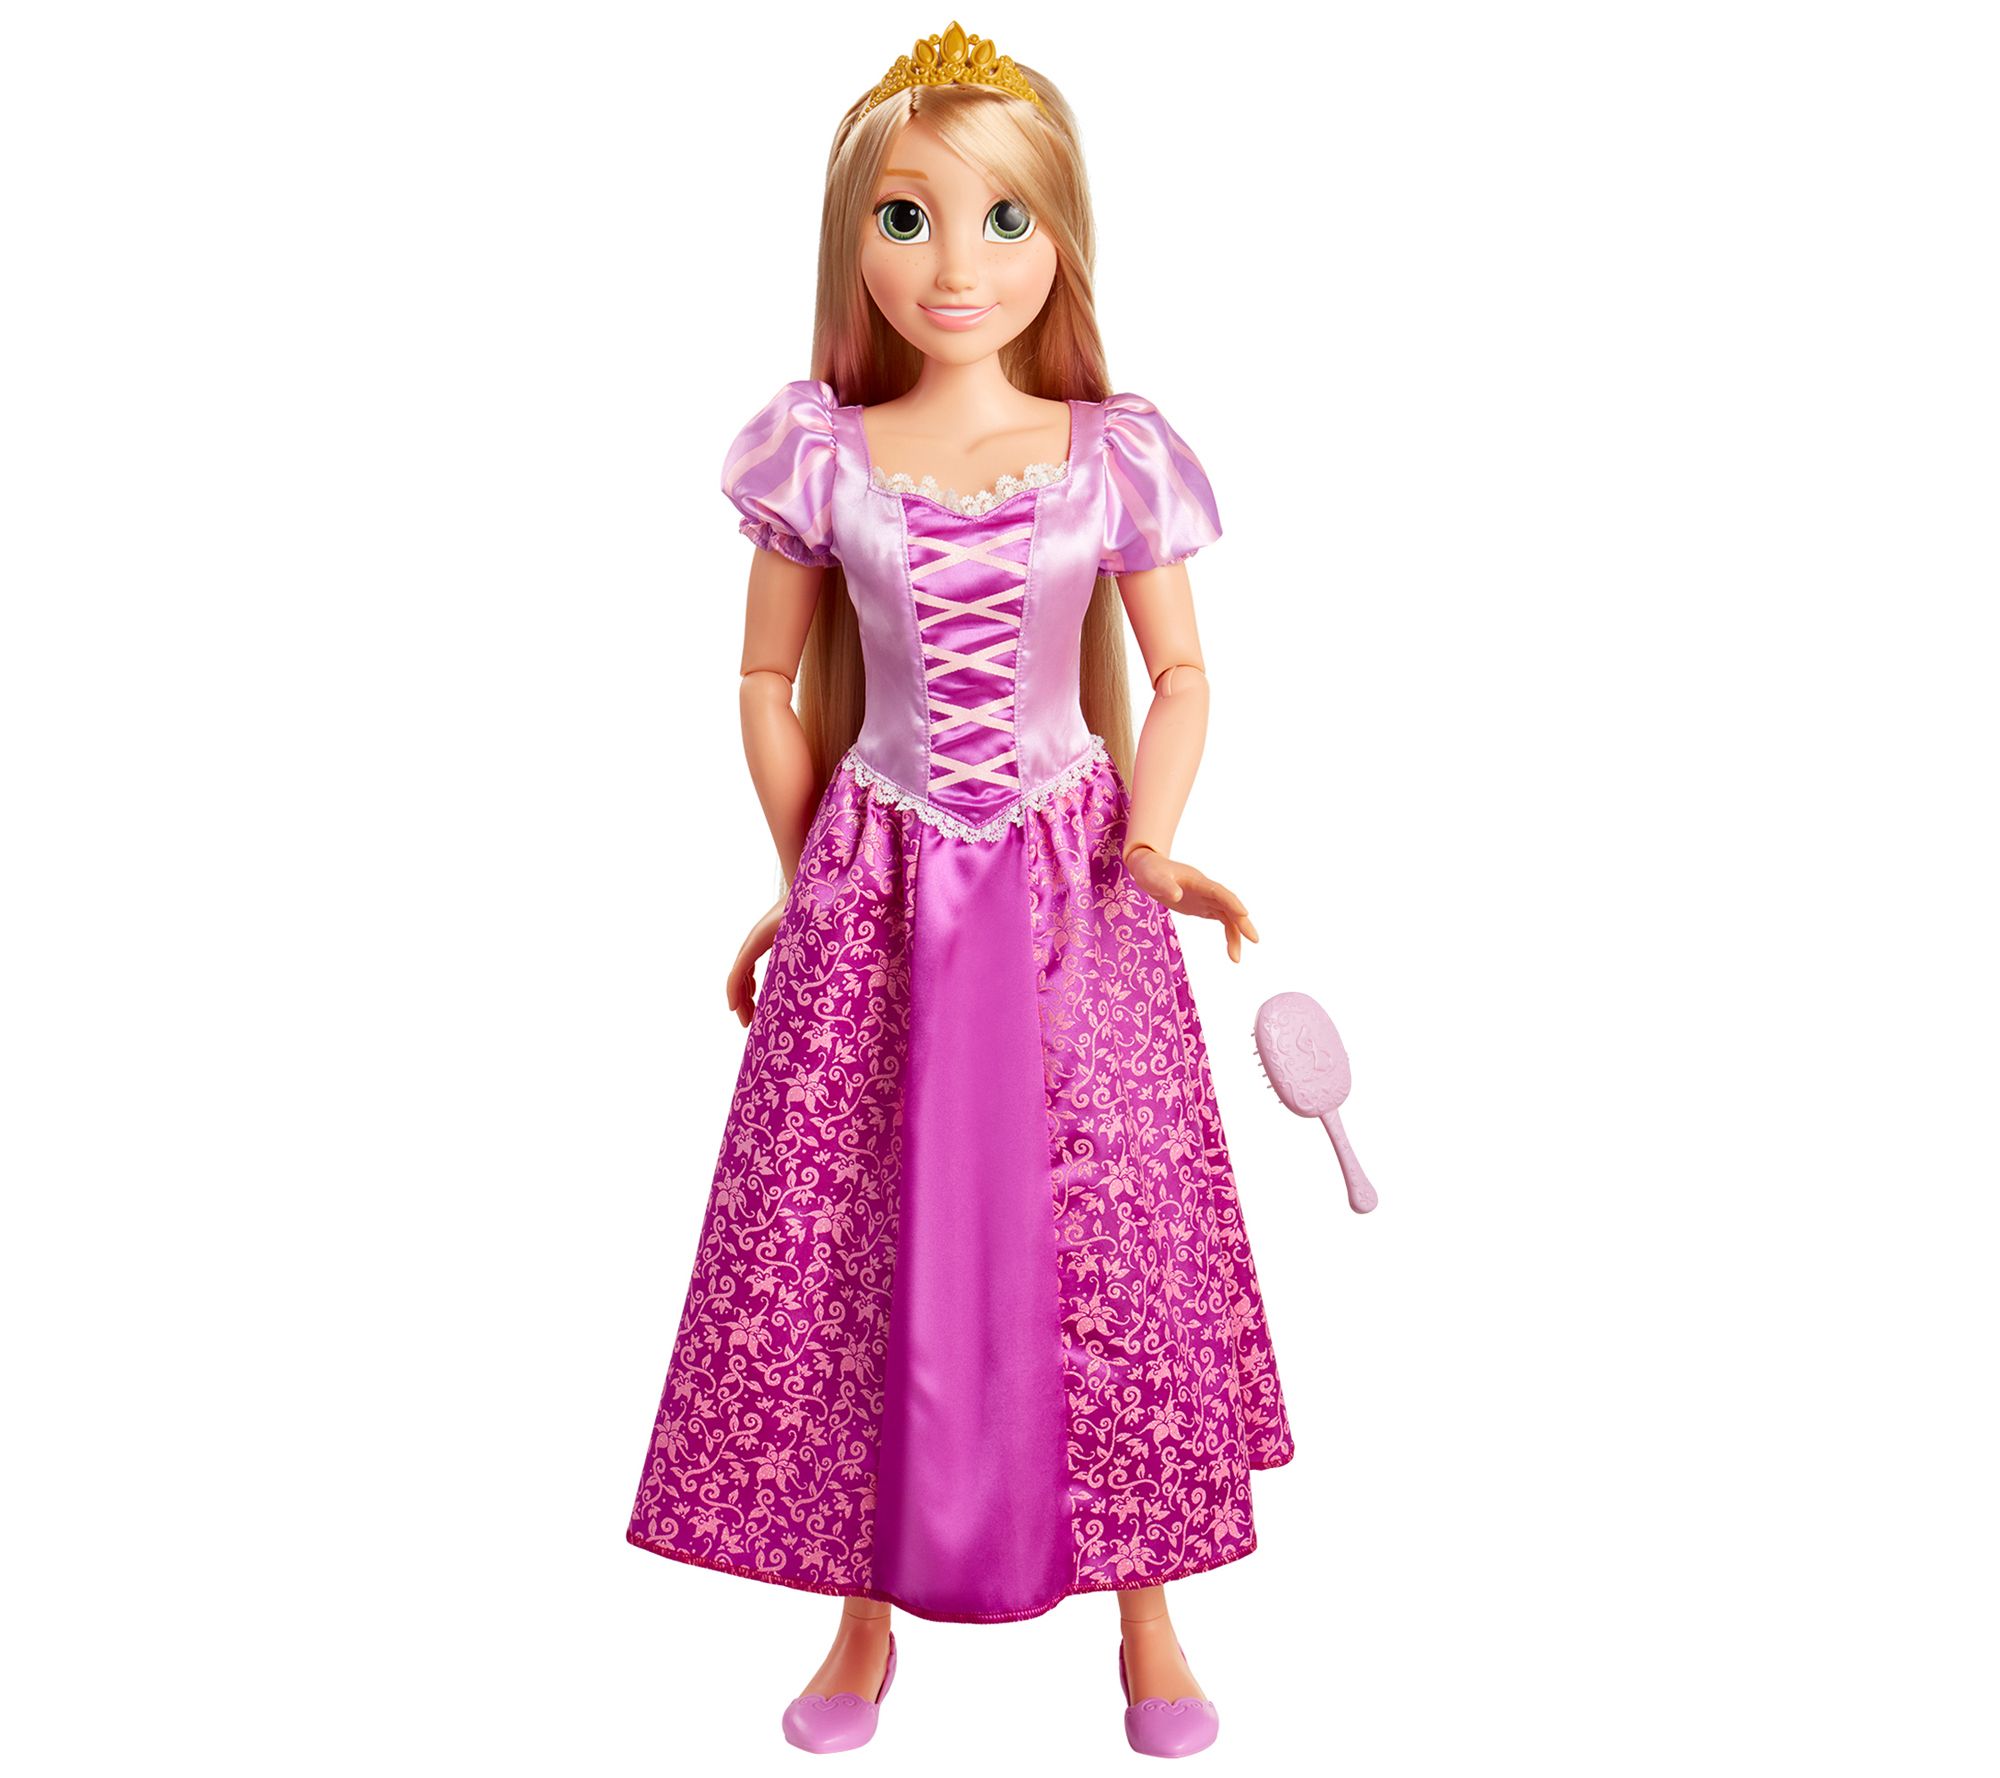 Disney Princess Playdate Ariel Doll : Target